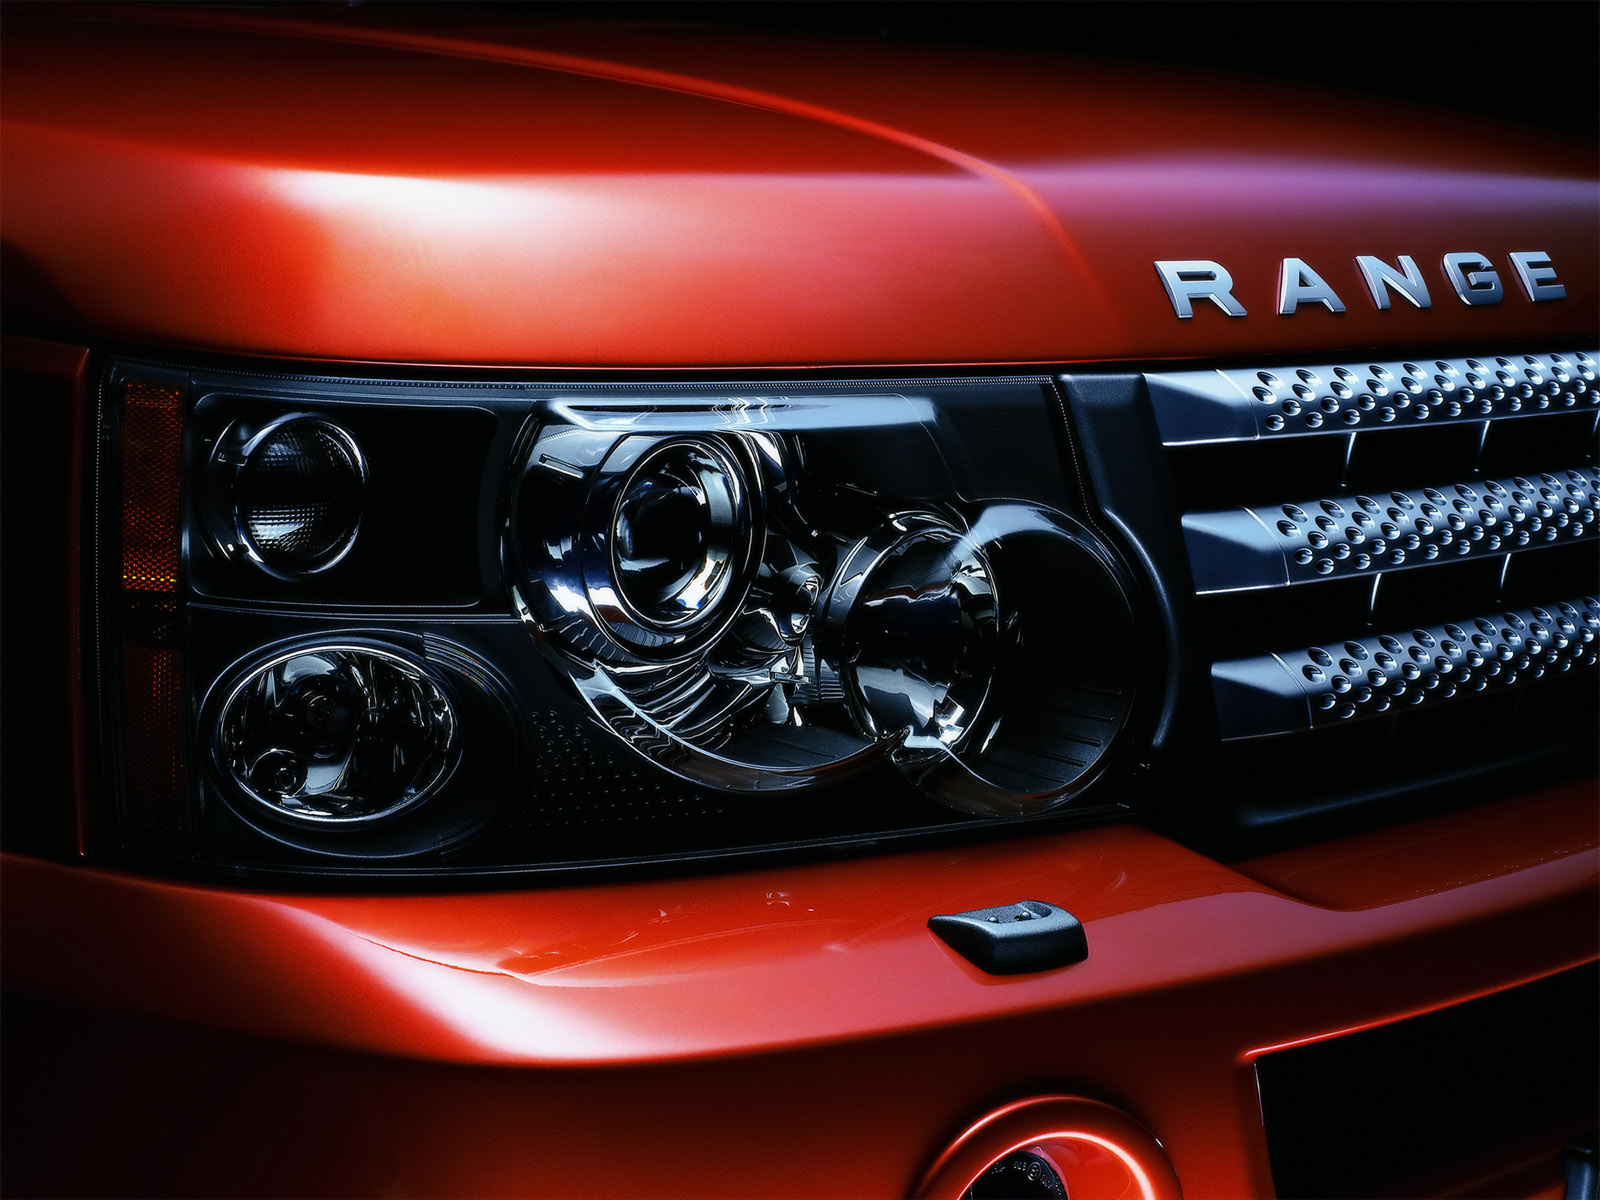 HD Range Rover Wallpaper Sport Background Image For